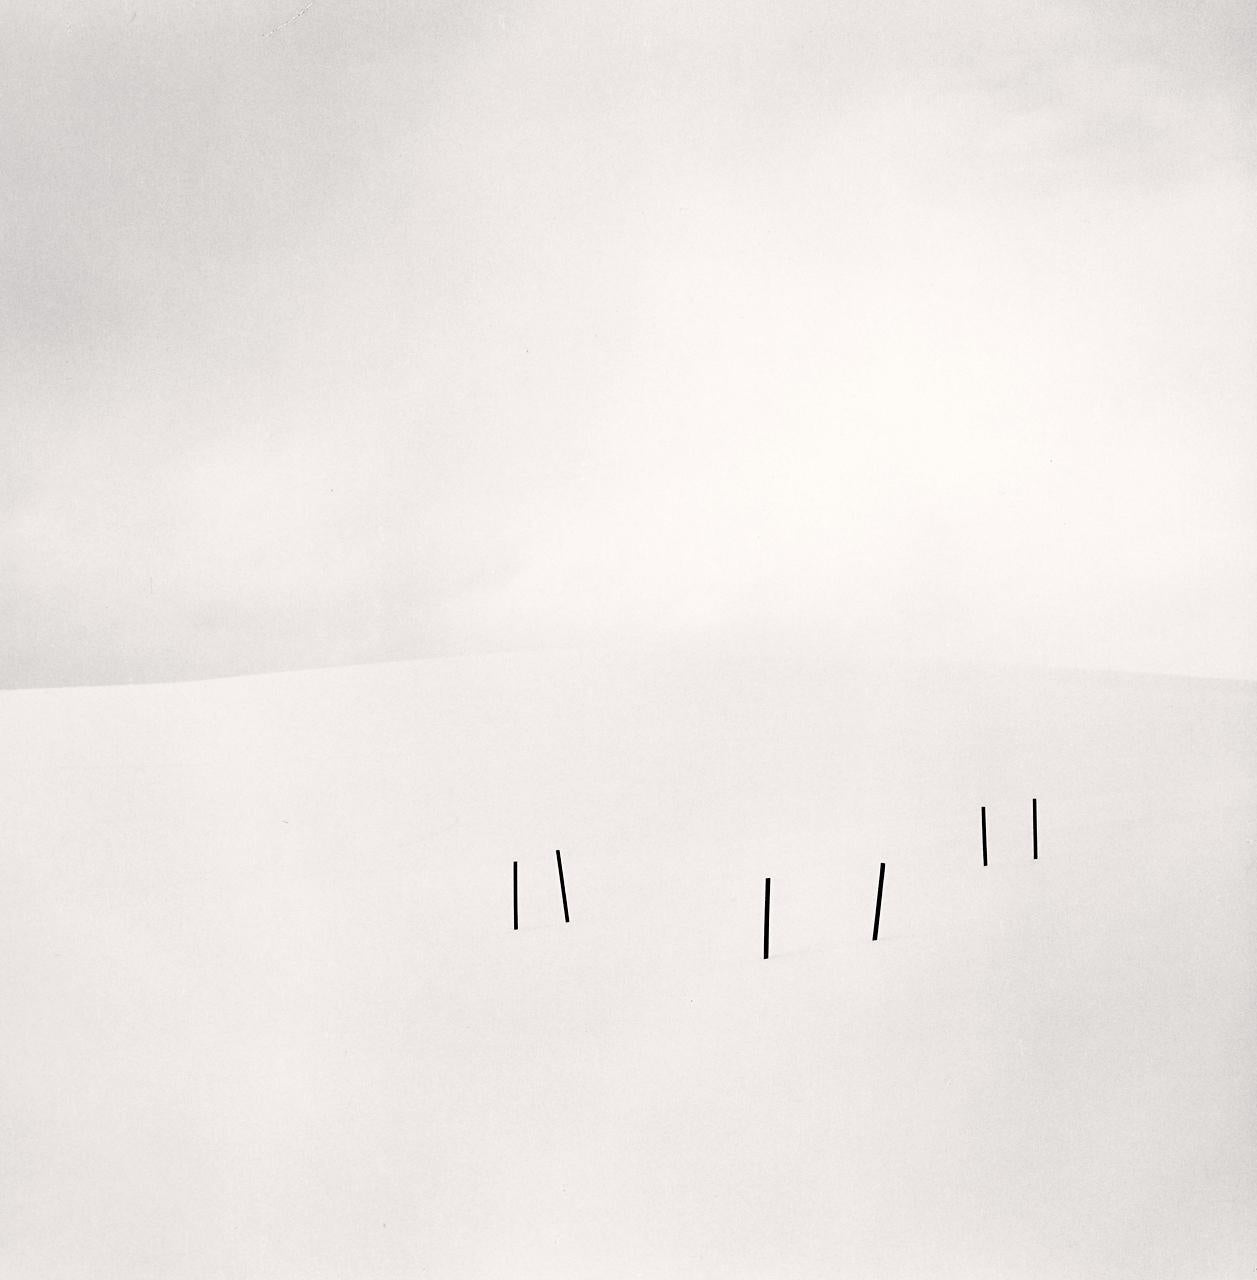 Michael Kenna Black and White Photograph - Asparagus Sticks, Study 3, Hokkaido, Japan 